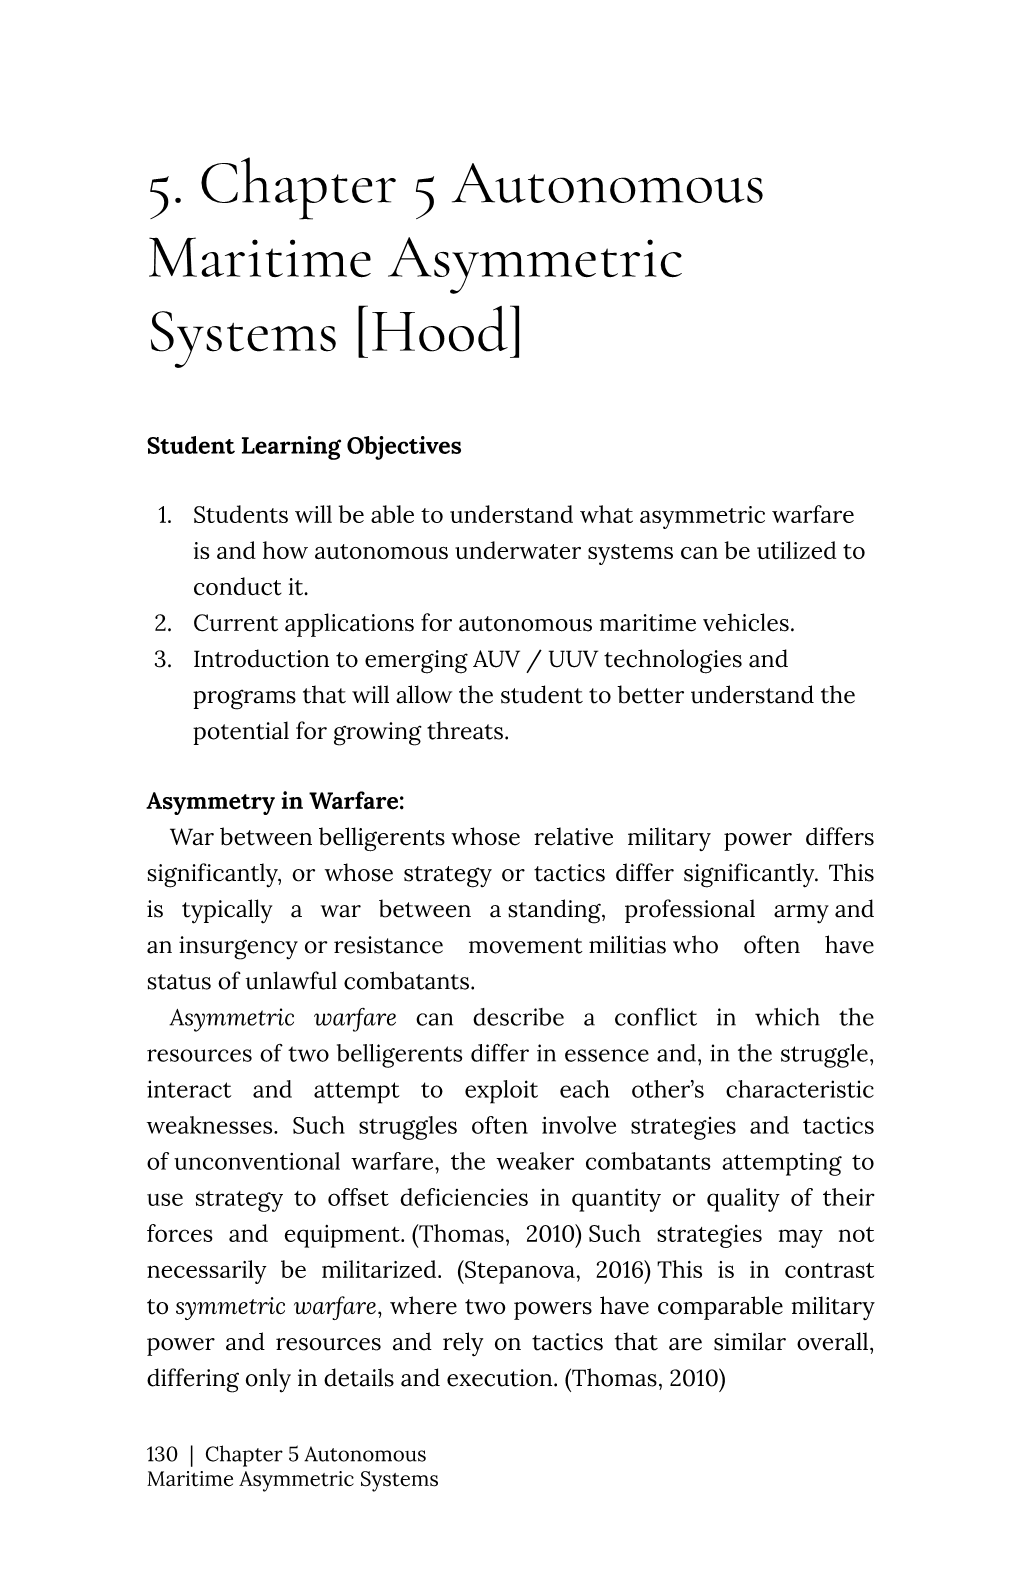 5. Chapter 5 Autonomous Maritime Asymmetric Systems [Hood]